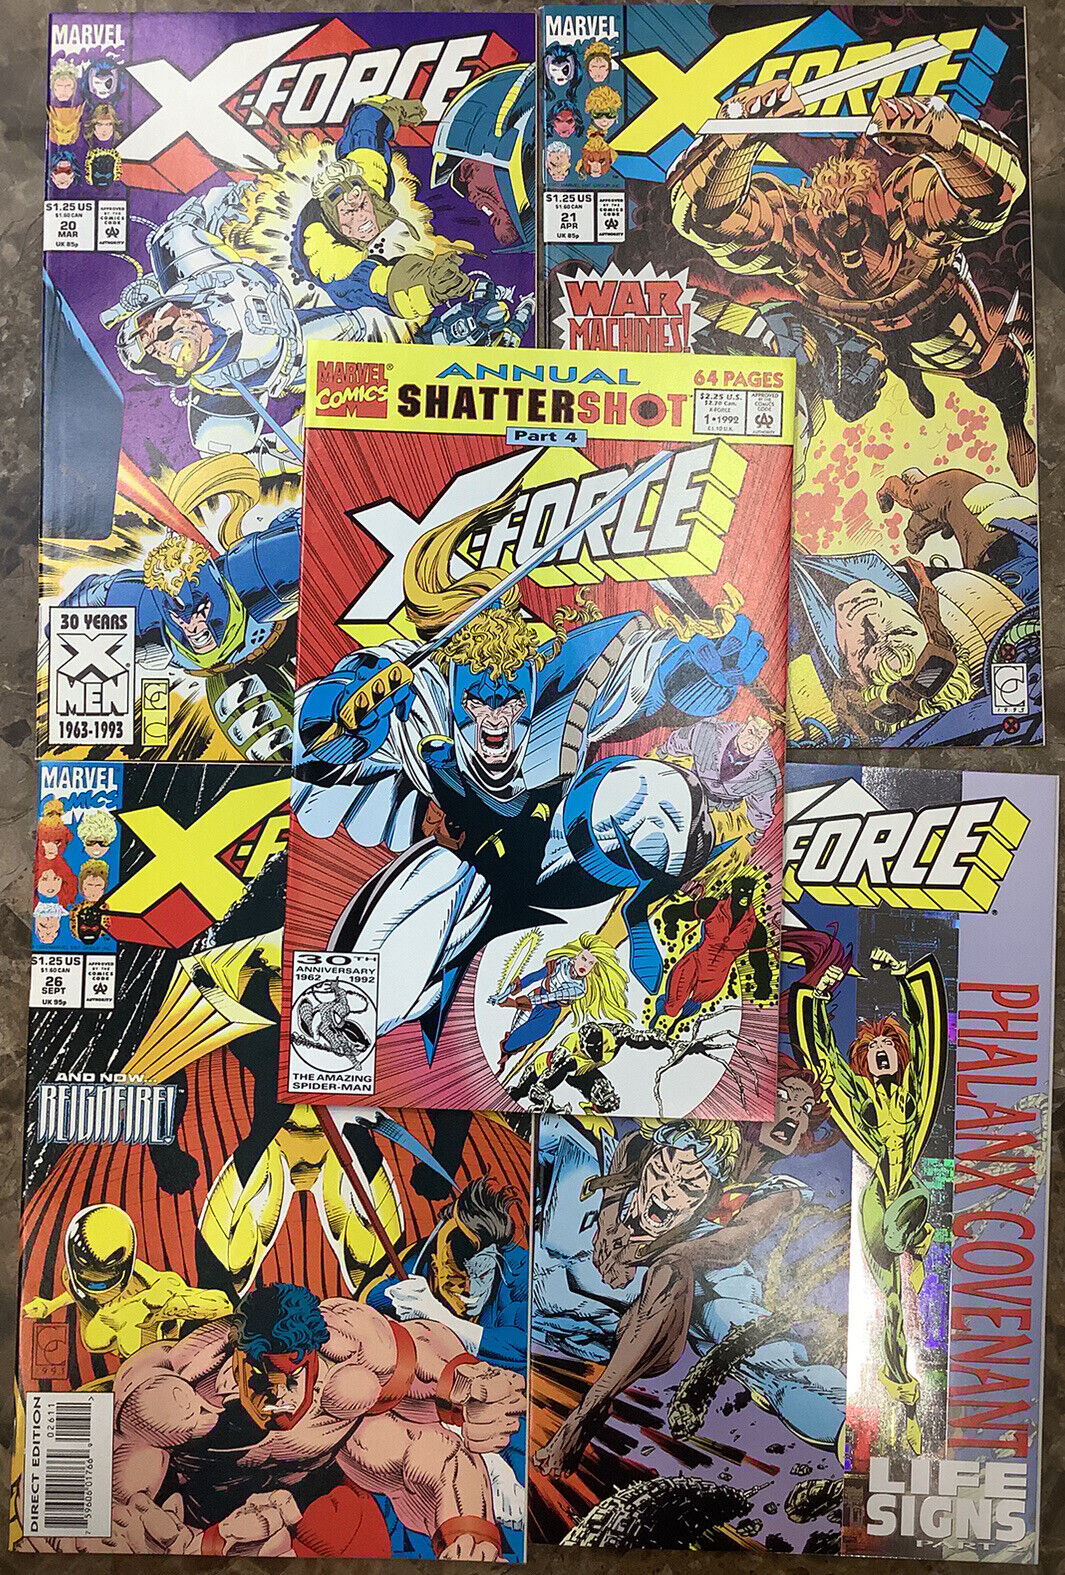 X-Force #20 #21 #26 #38 & Annual #1 Marvel 1993/94 Comic Books